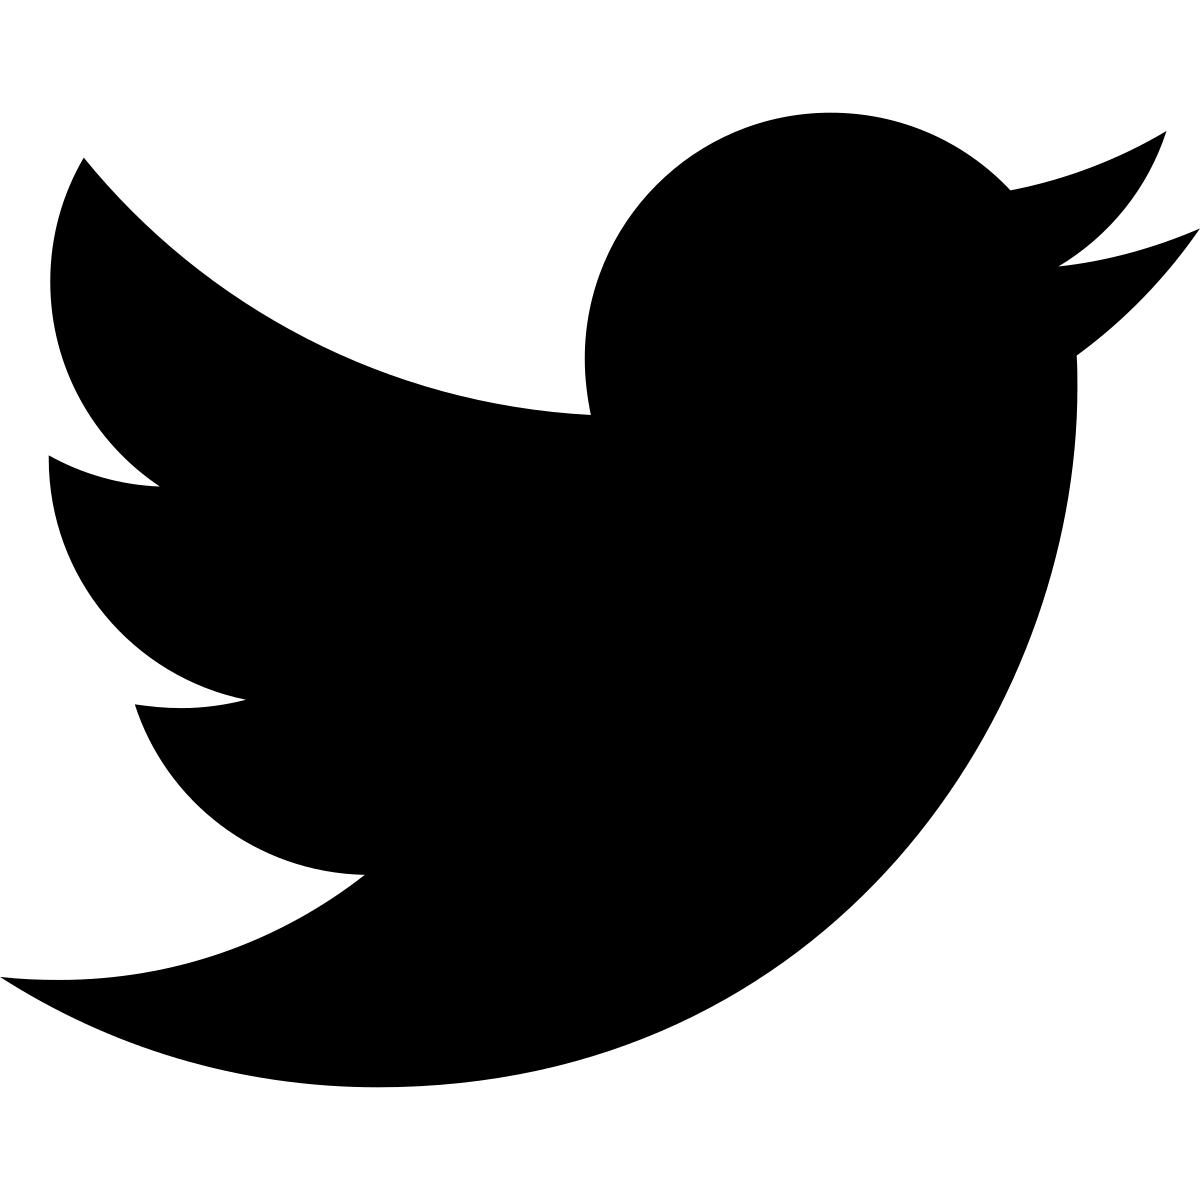 File:Logo of Twitter.svg - Wikimedia Commons